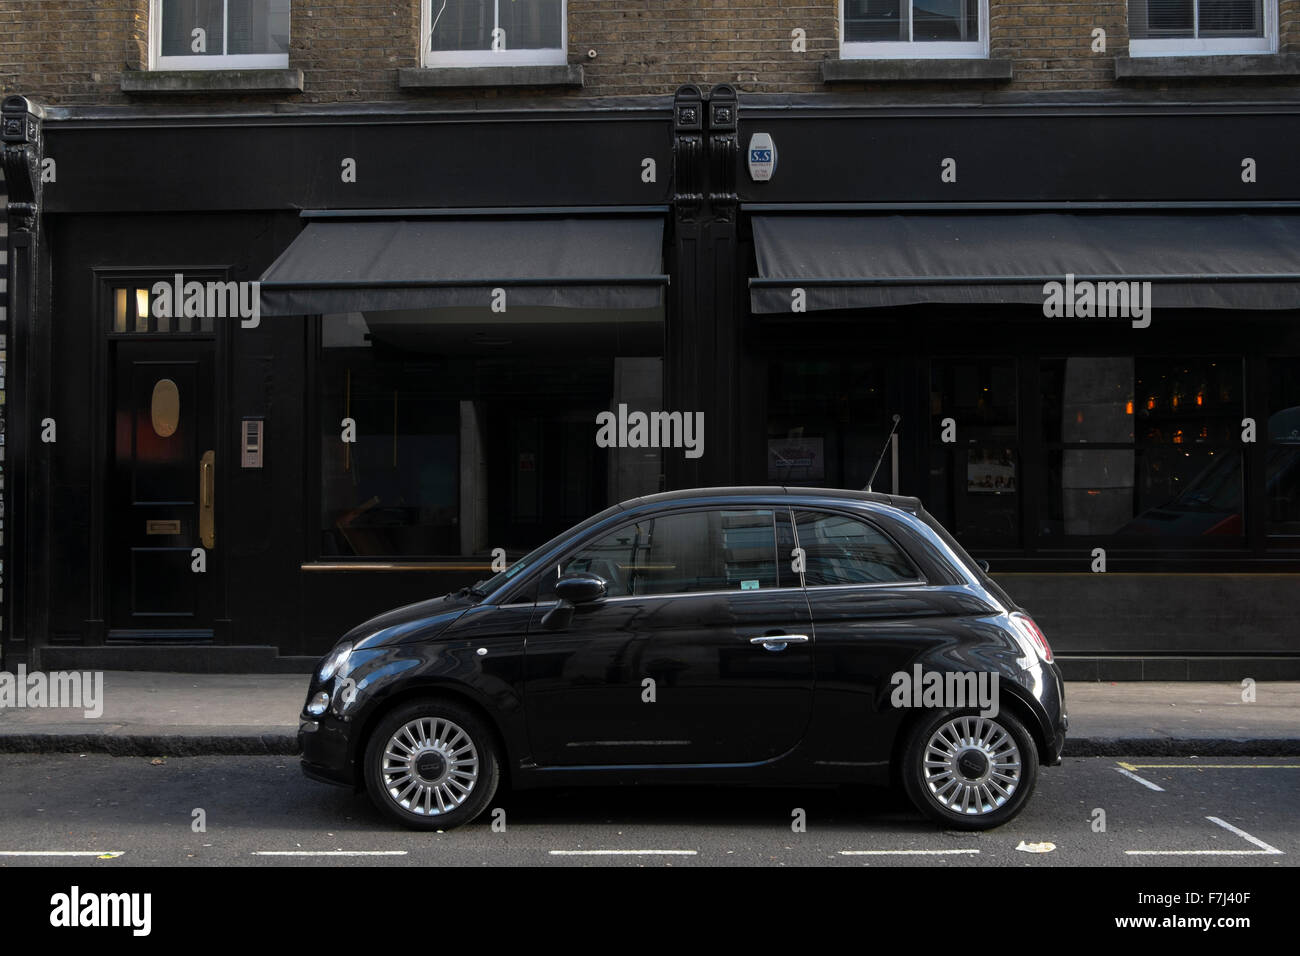 Black Fiat Cinquecento 500 car parked in Wardour Street, Soho, London, England, UK Stock Photo